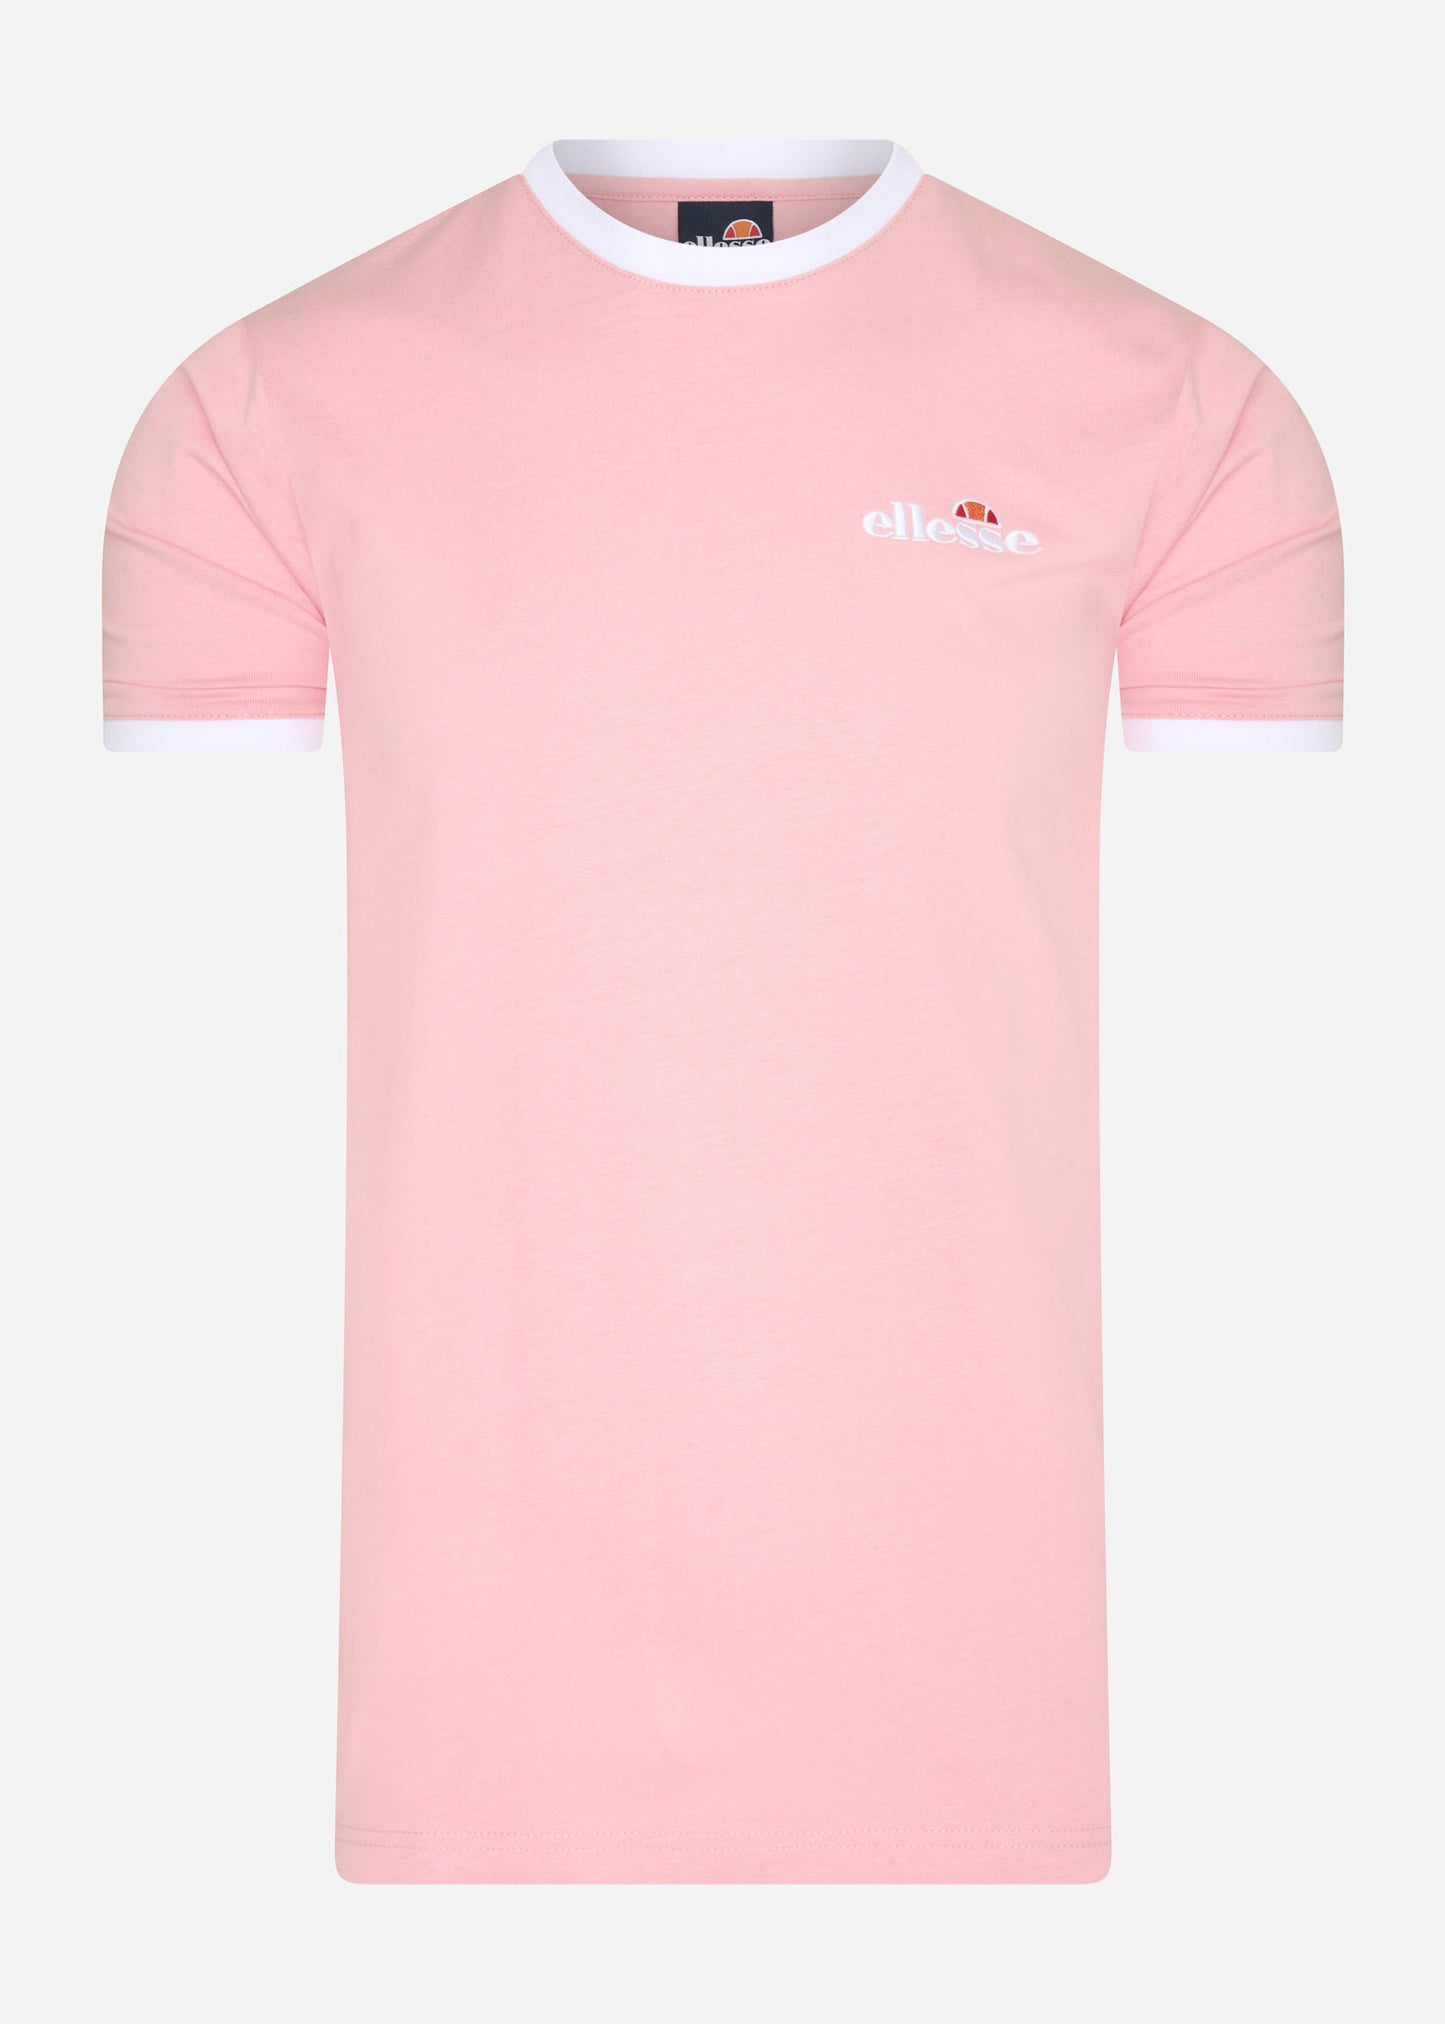 Meduno tee - light pink